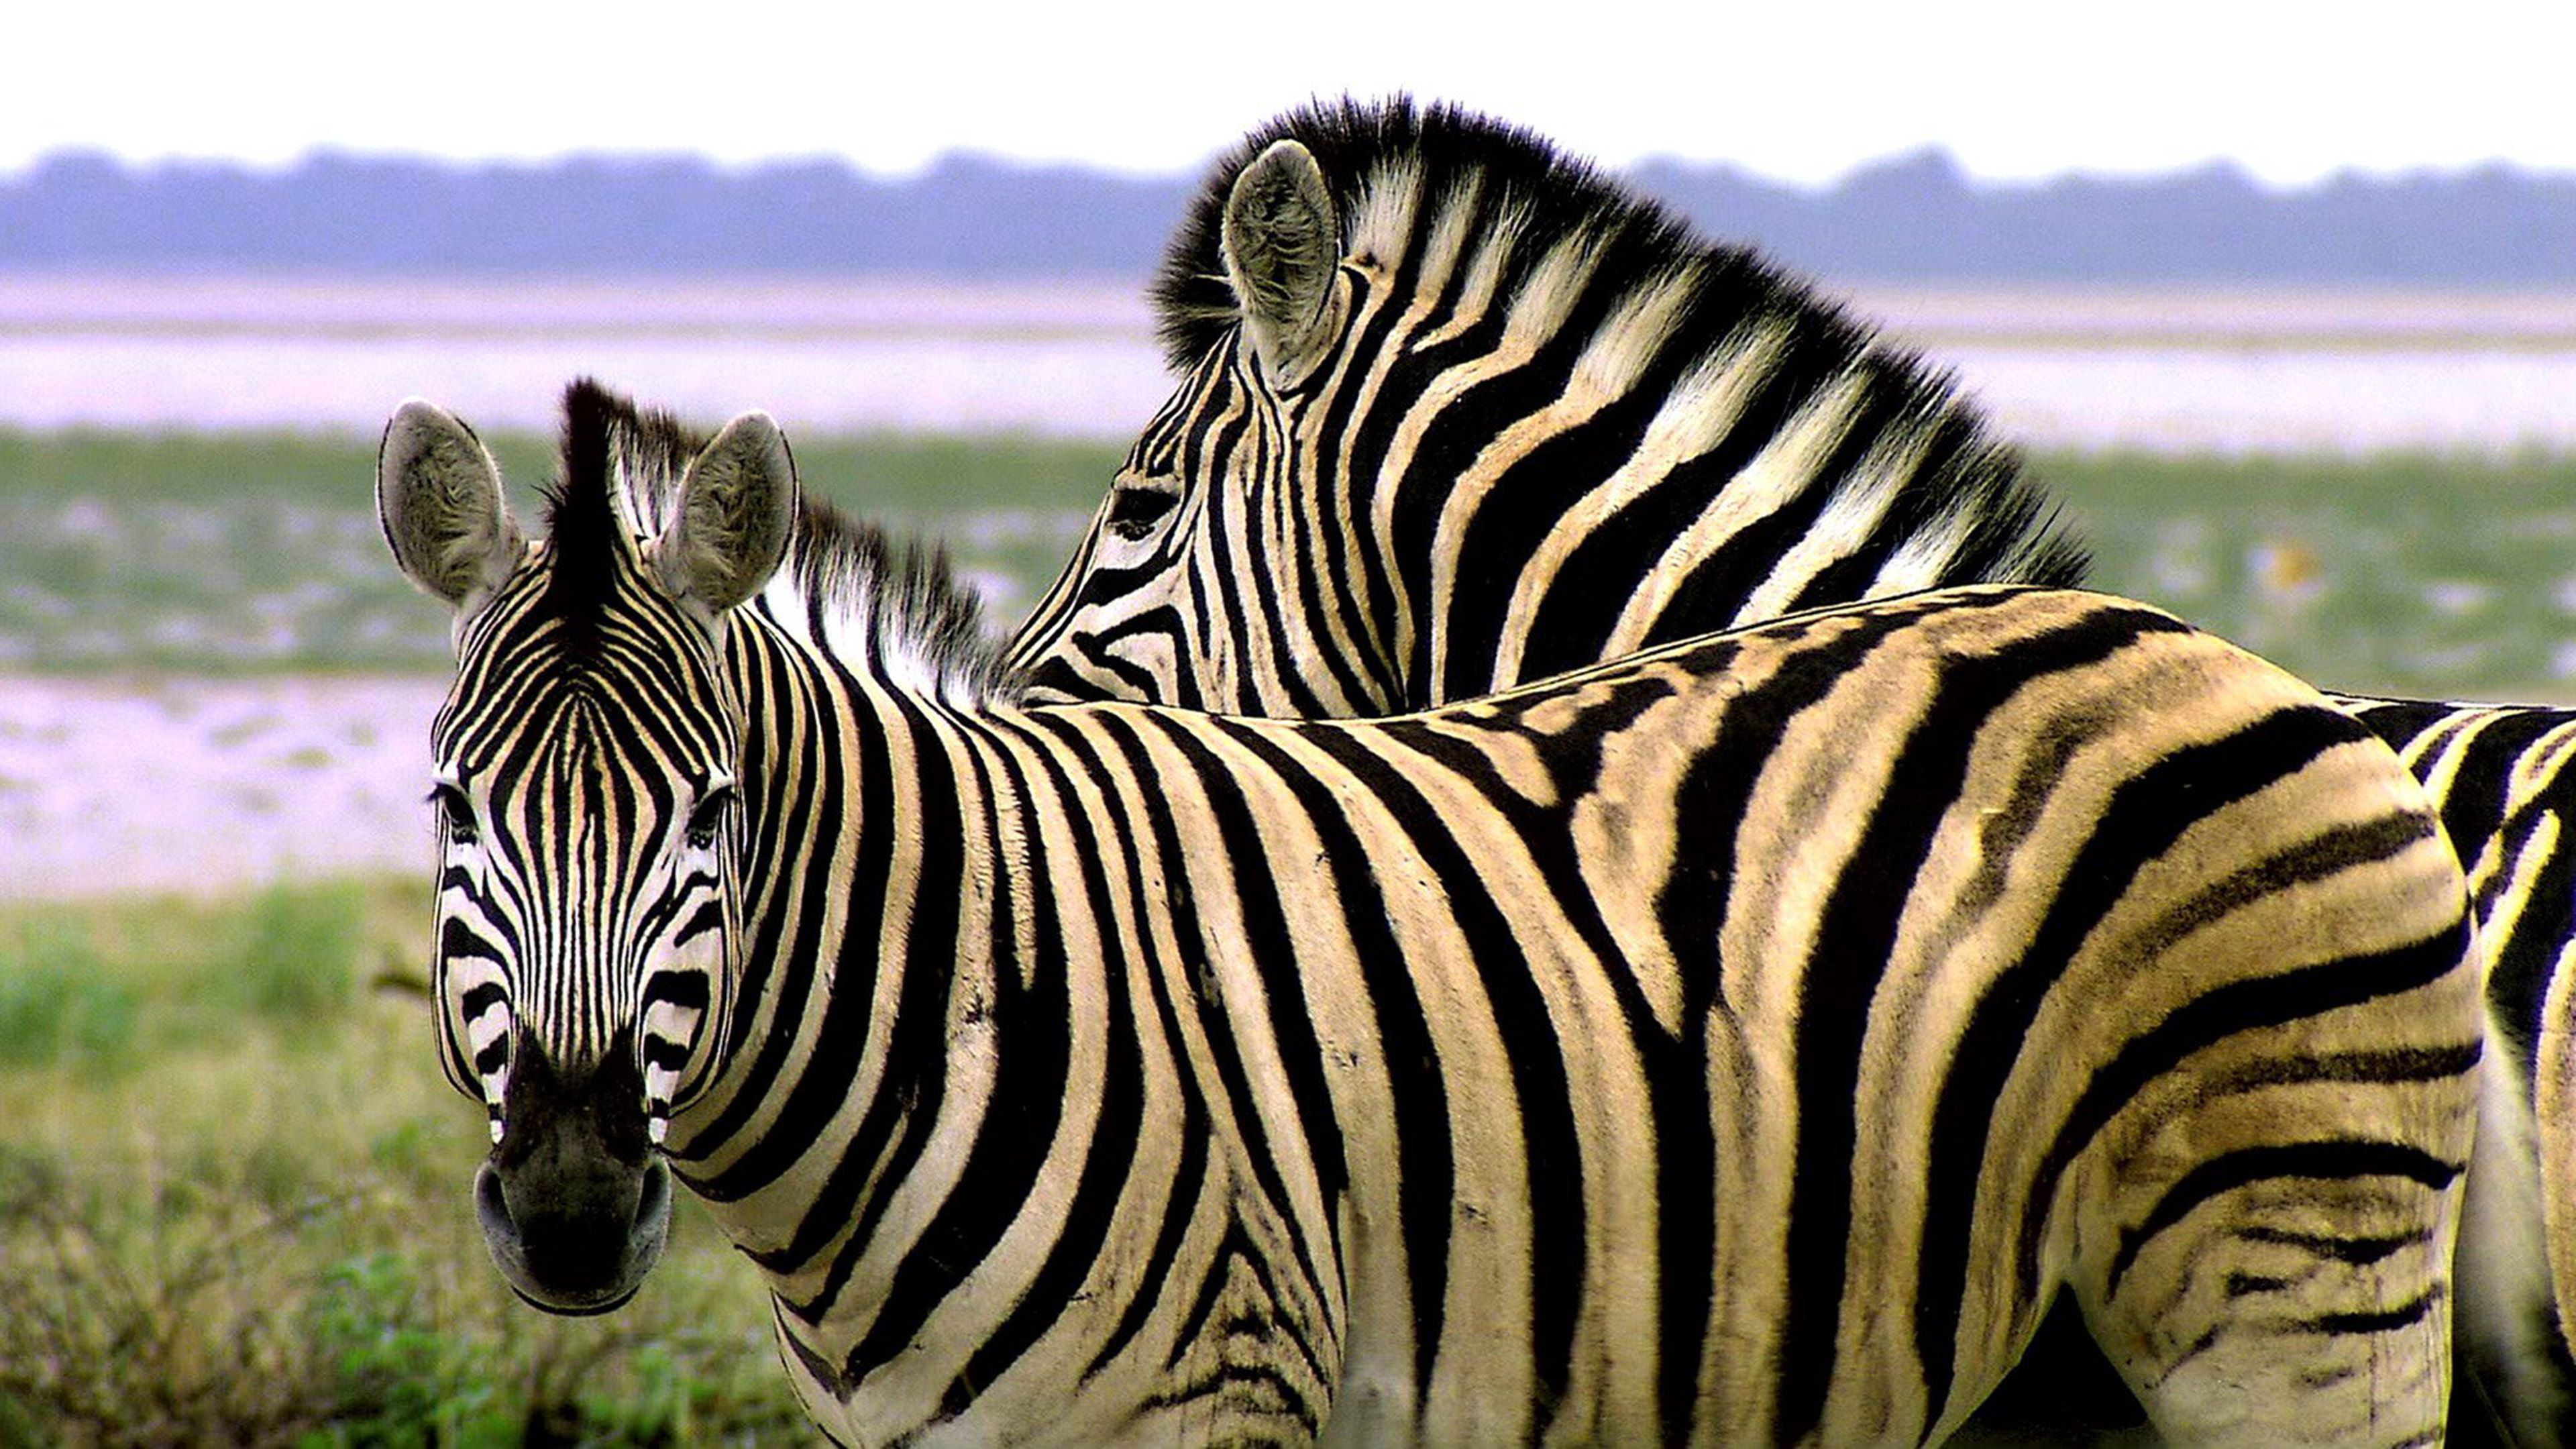 Animals Of Africa Zebra Striped Like A Tiger HD Wallpaper